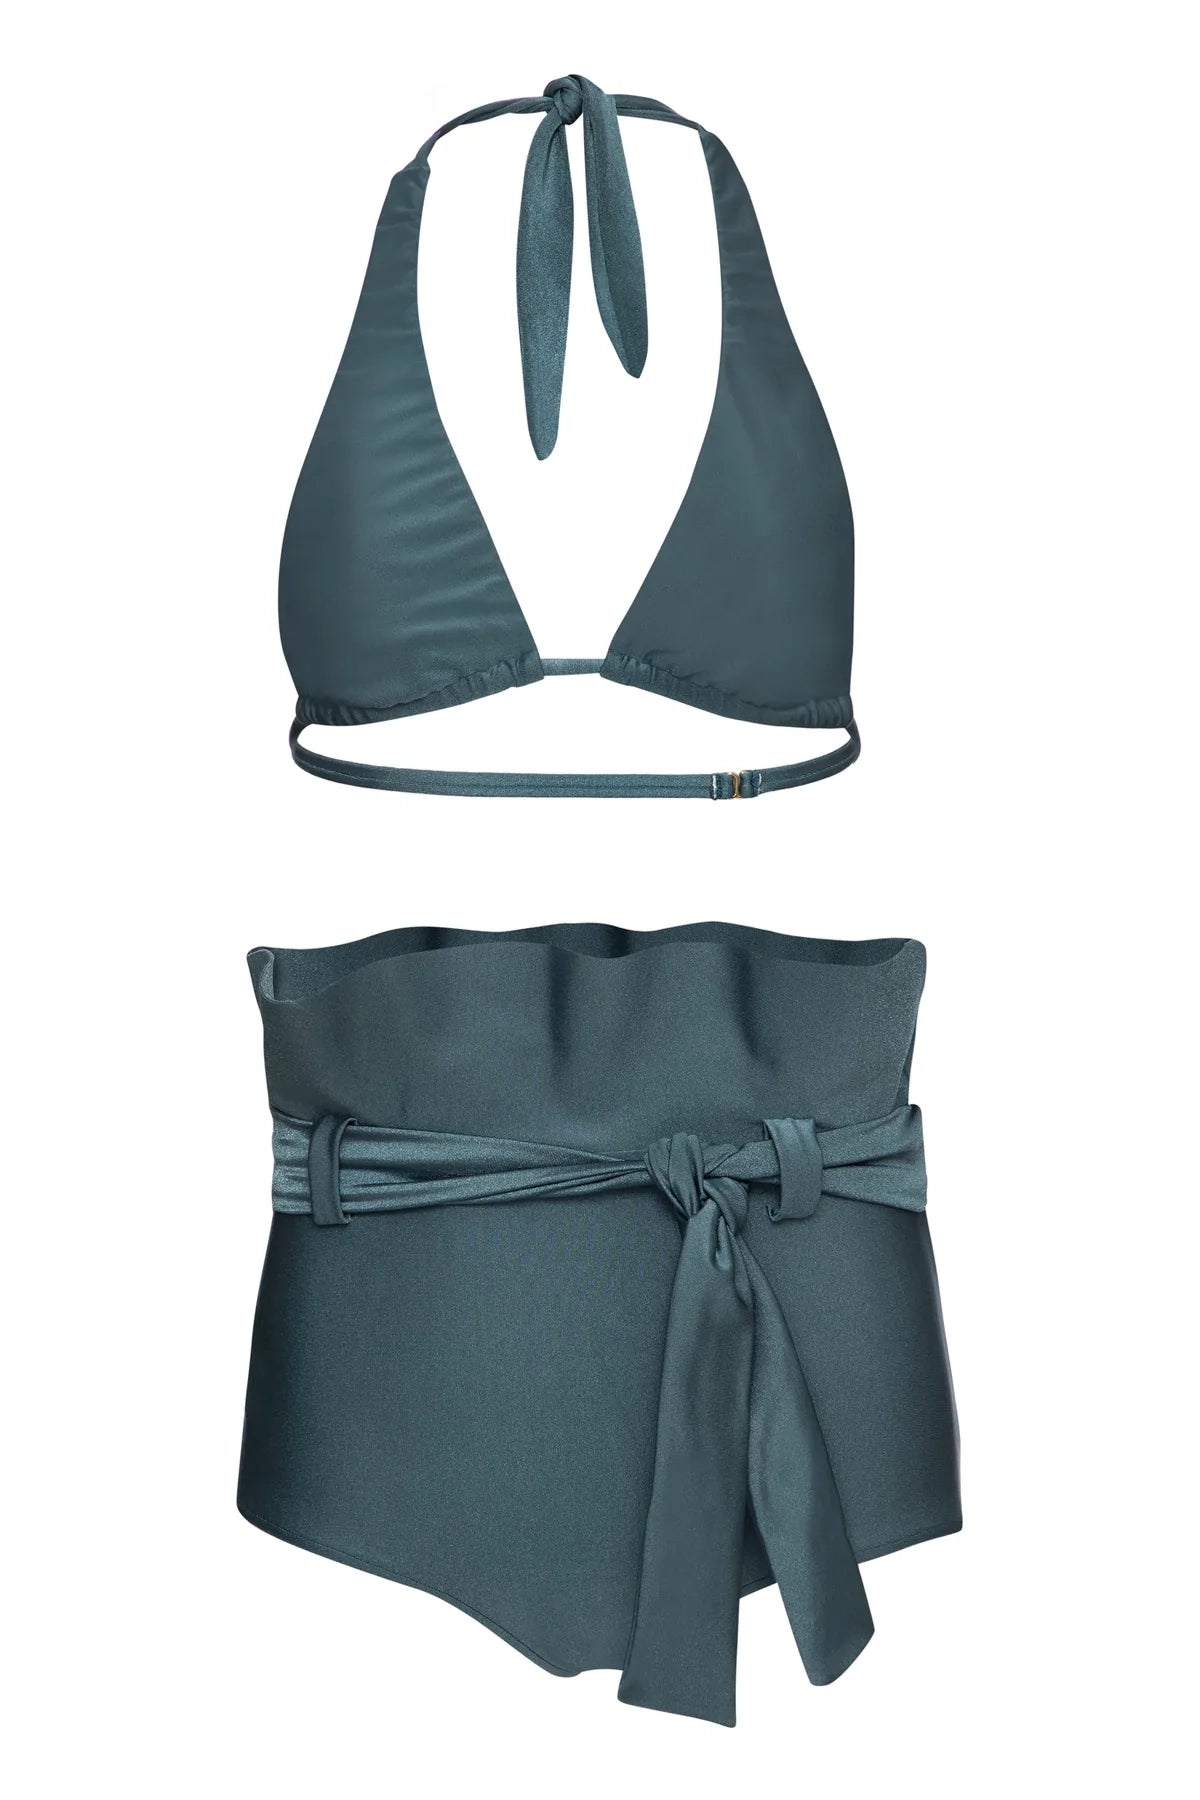 Bain Couture Clochard Blue High-Waisted Bikini Product